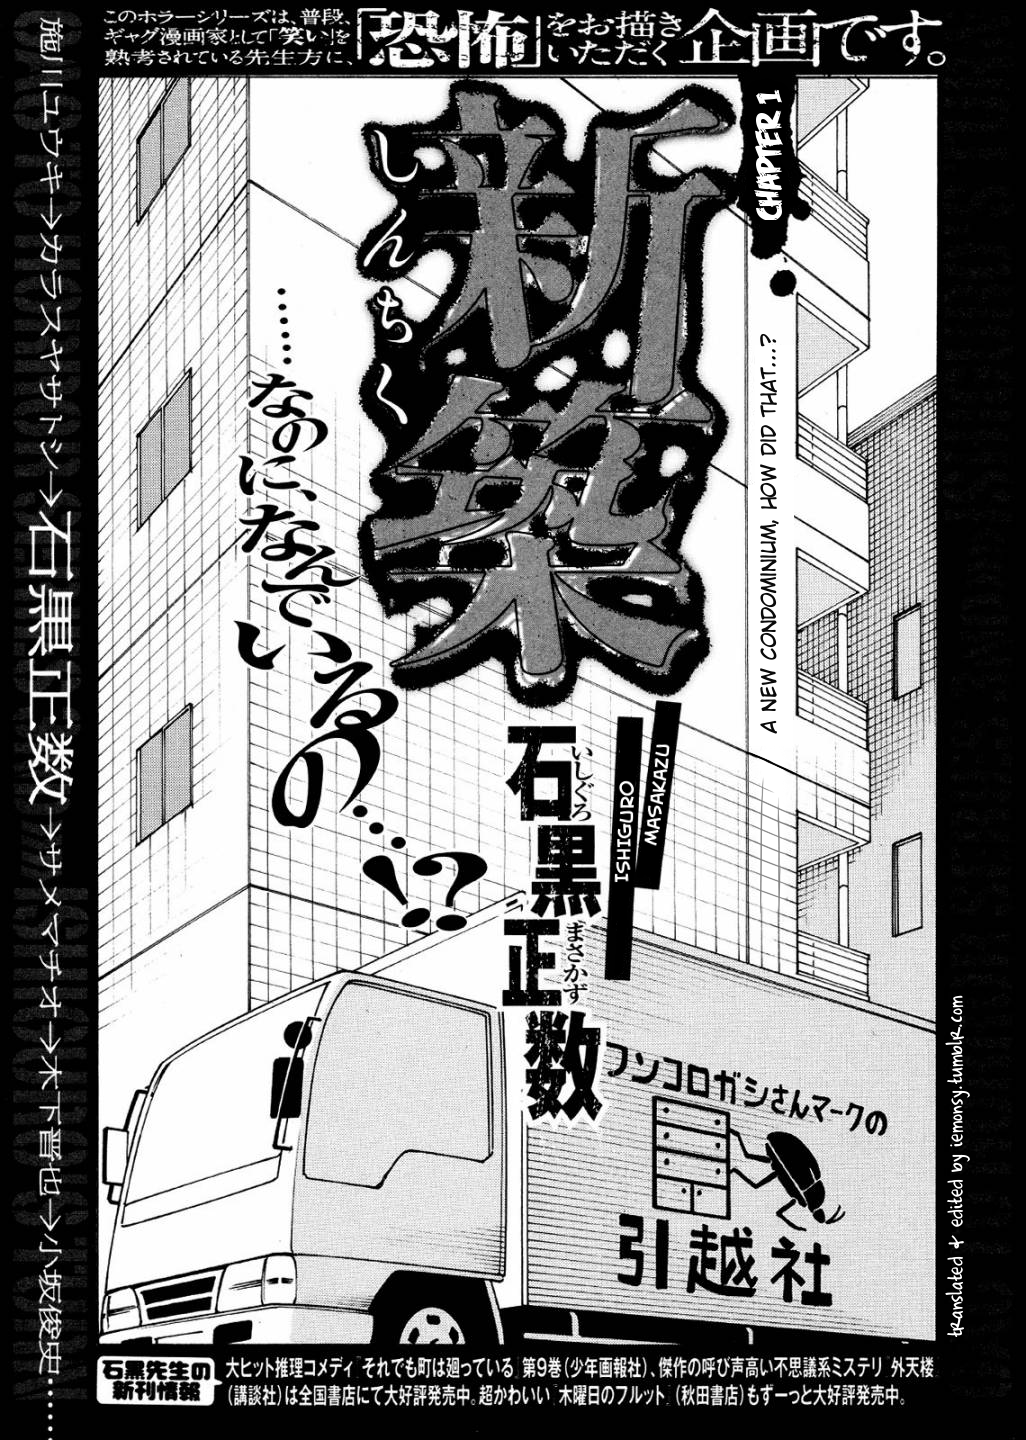 Ishiguro Masakazu's Kyoufu Tanpen cover 0